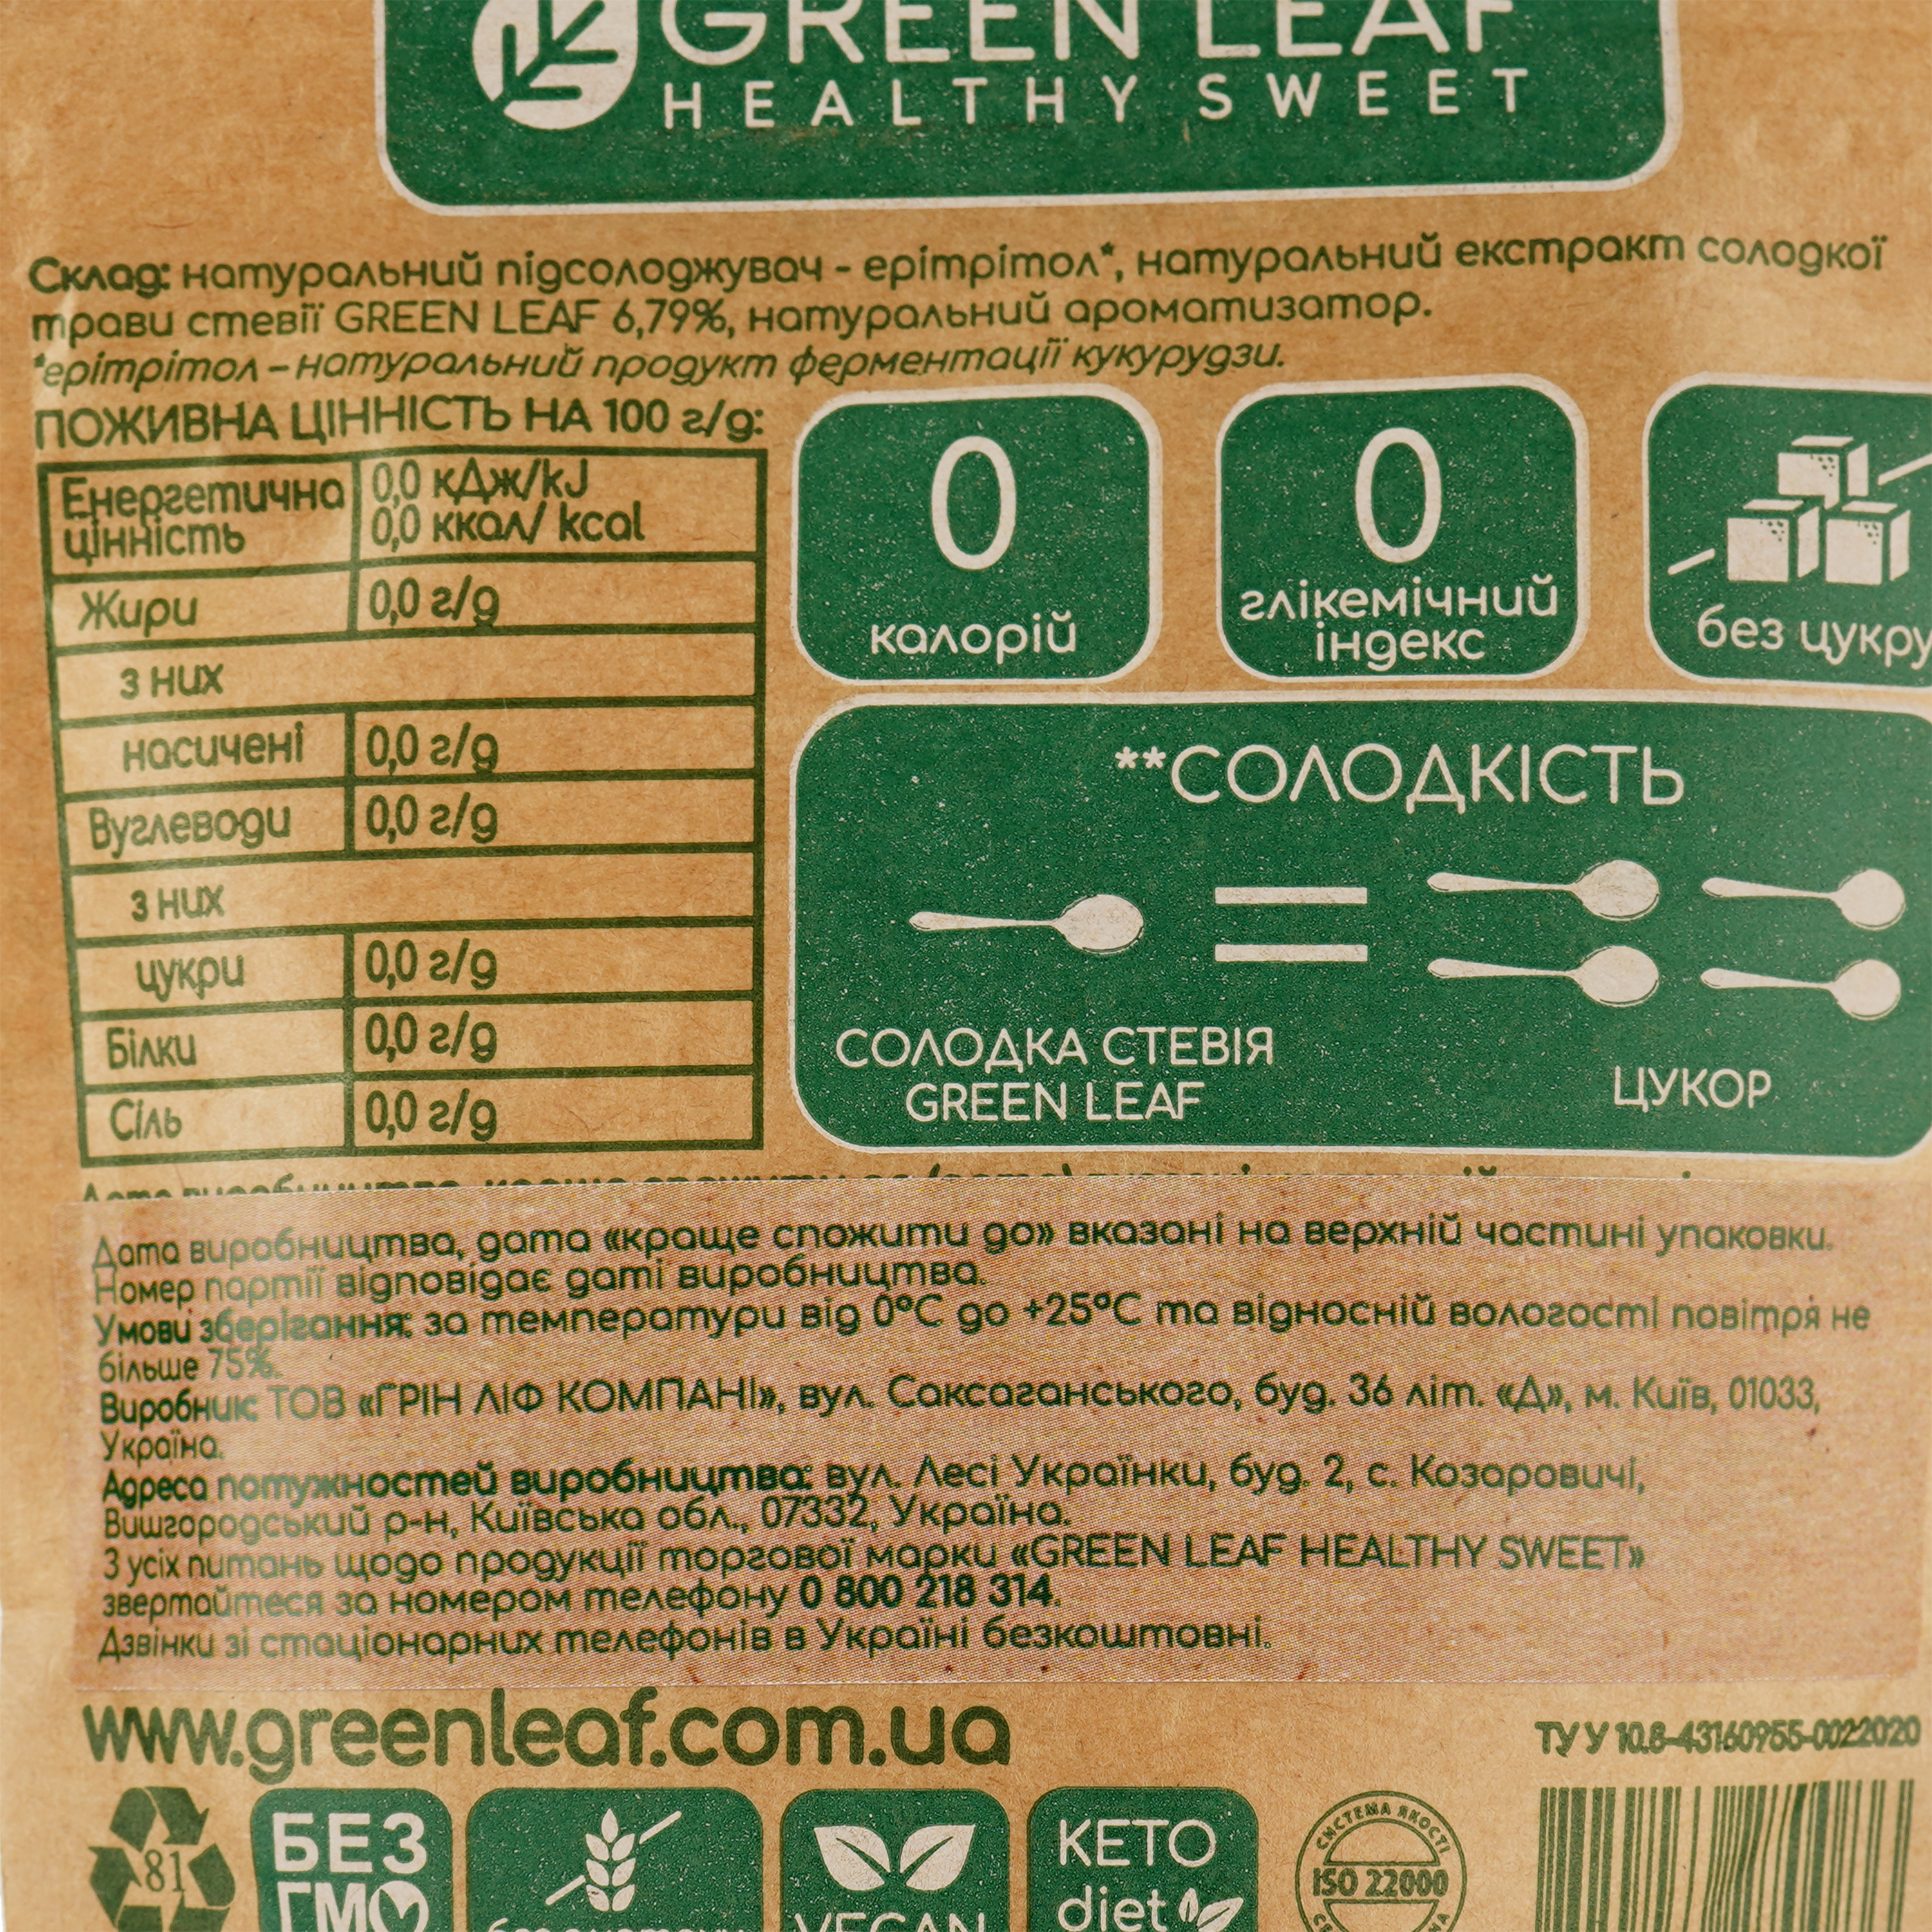 Сладкая стевия Green Leaf, 100 г - фото 3